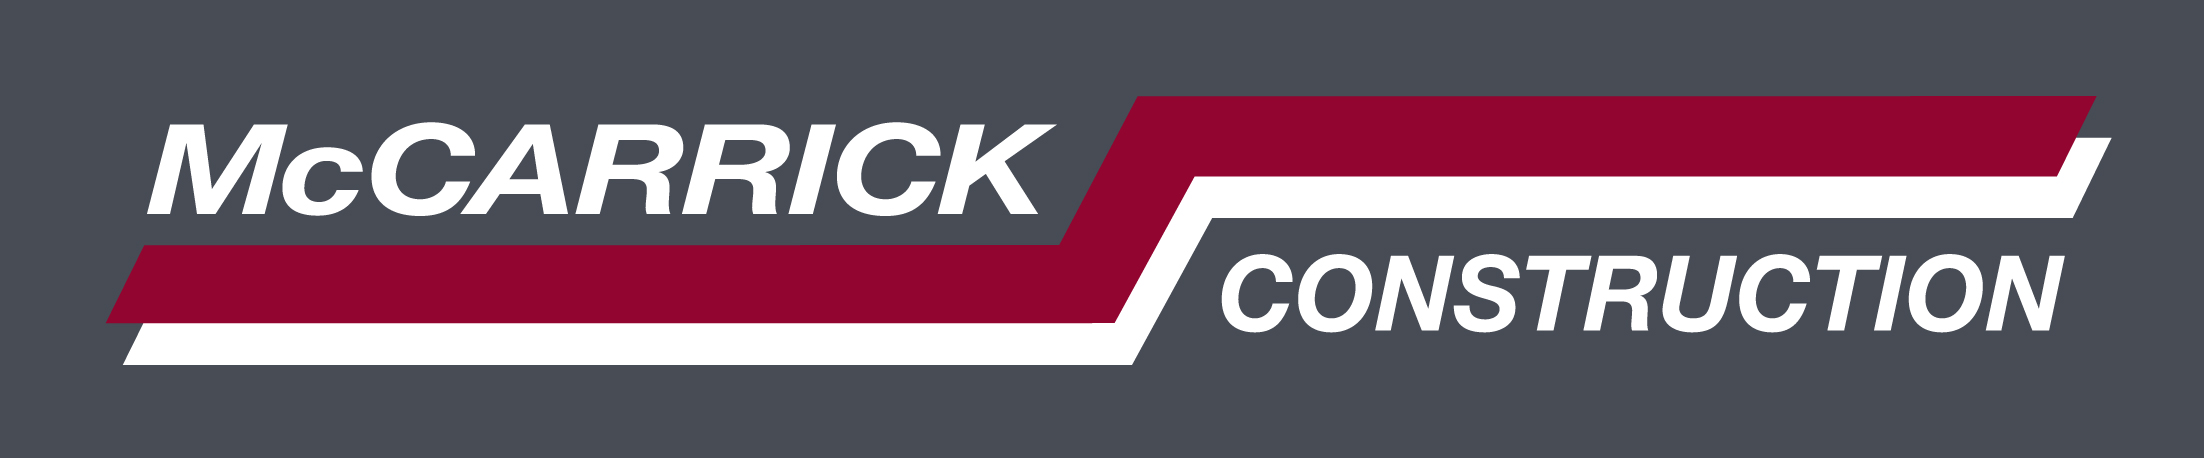 McCarrick Construction Co Ltd